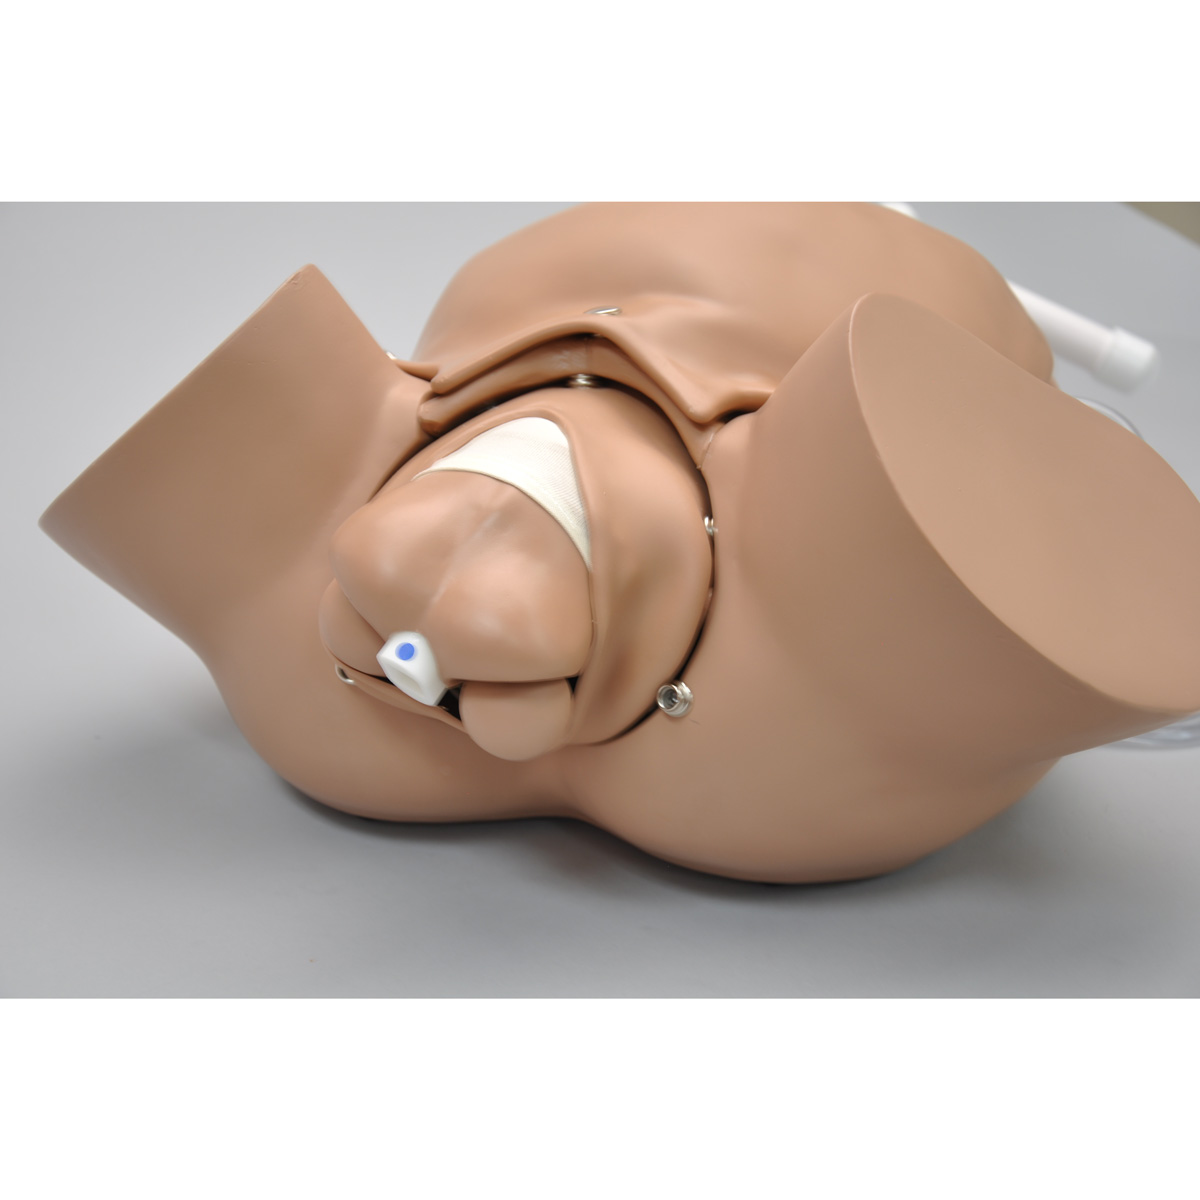 Gaumard® S500 Original Childbirth Simulator 